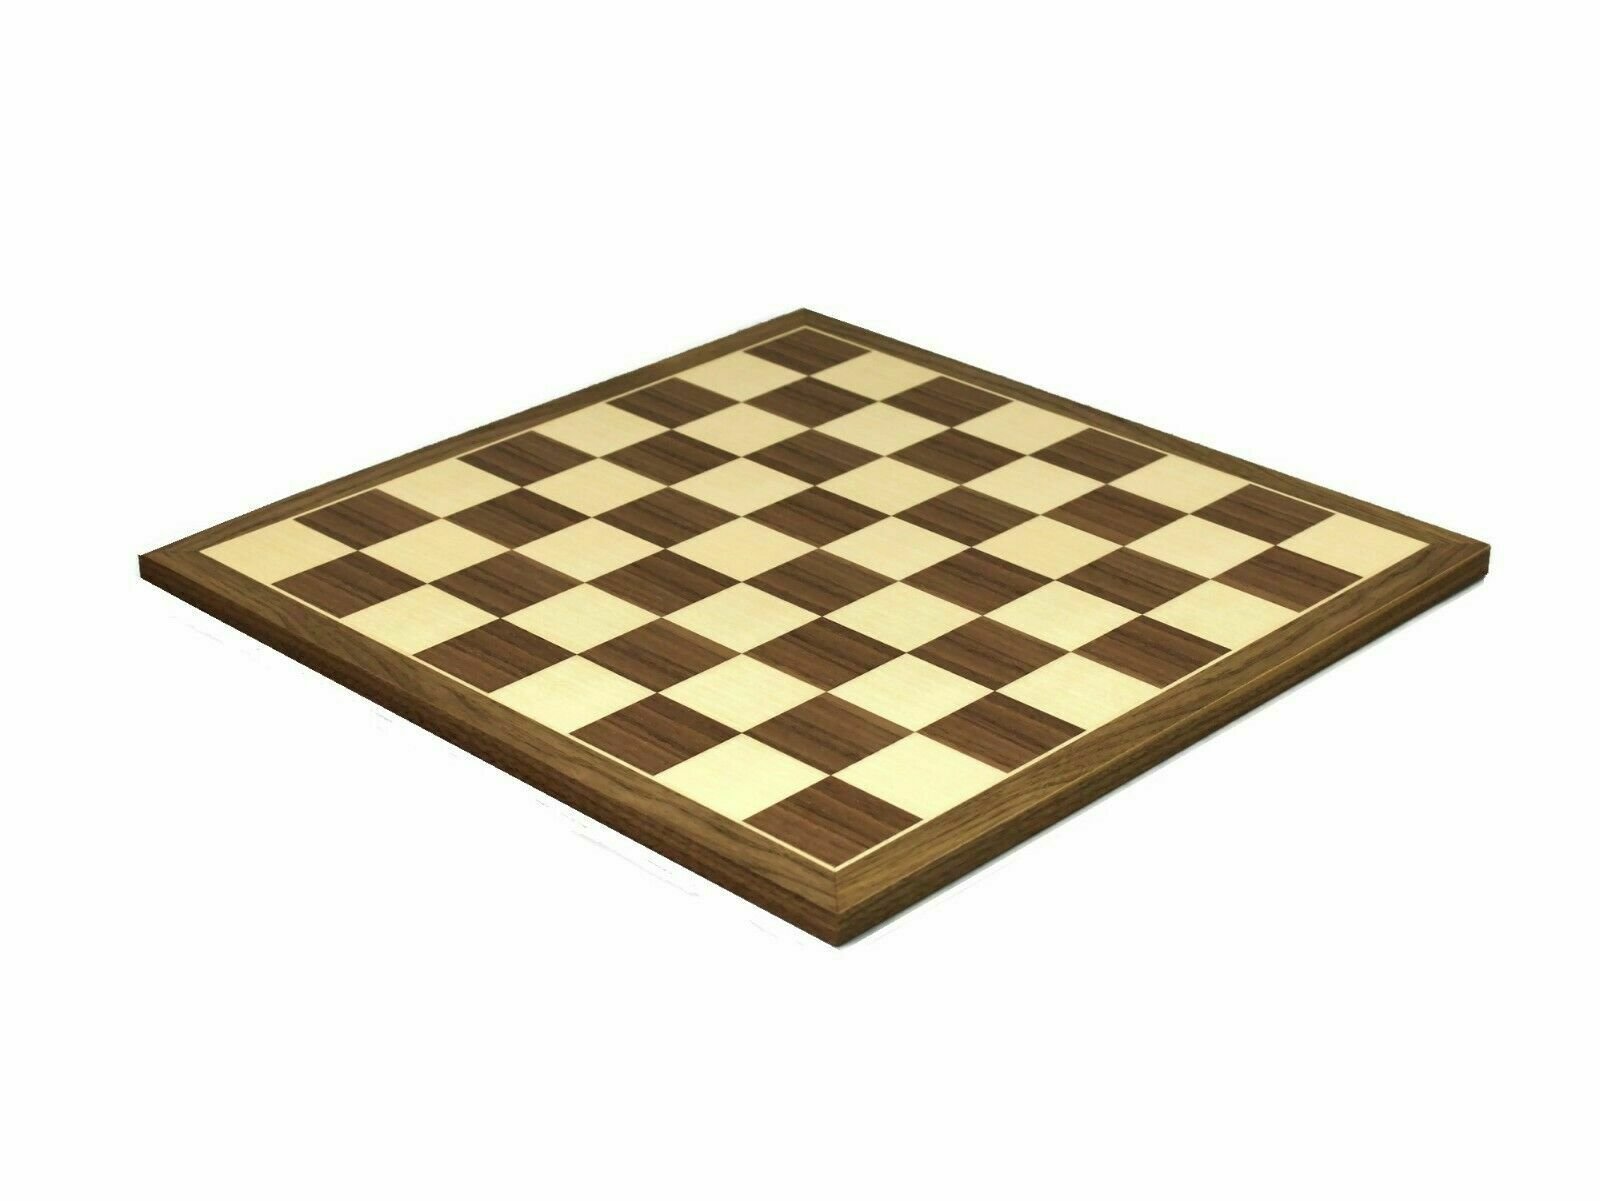 Grandmaster Electronic Magnetic Talking Chess Set Game - Play 2